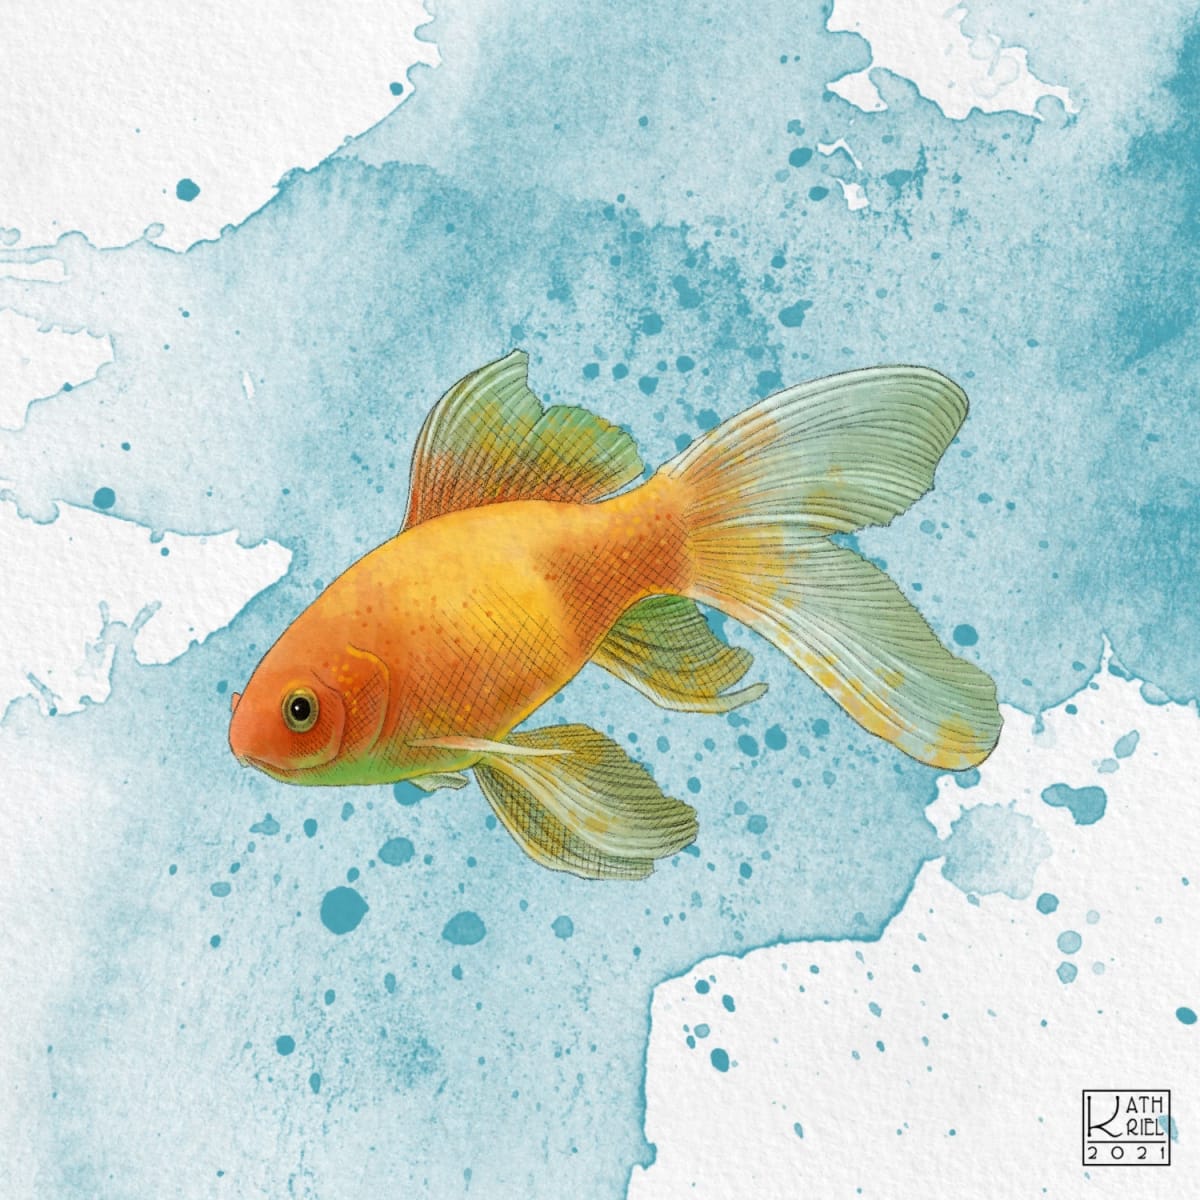 The Dreamfish by Kathriel Brister 